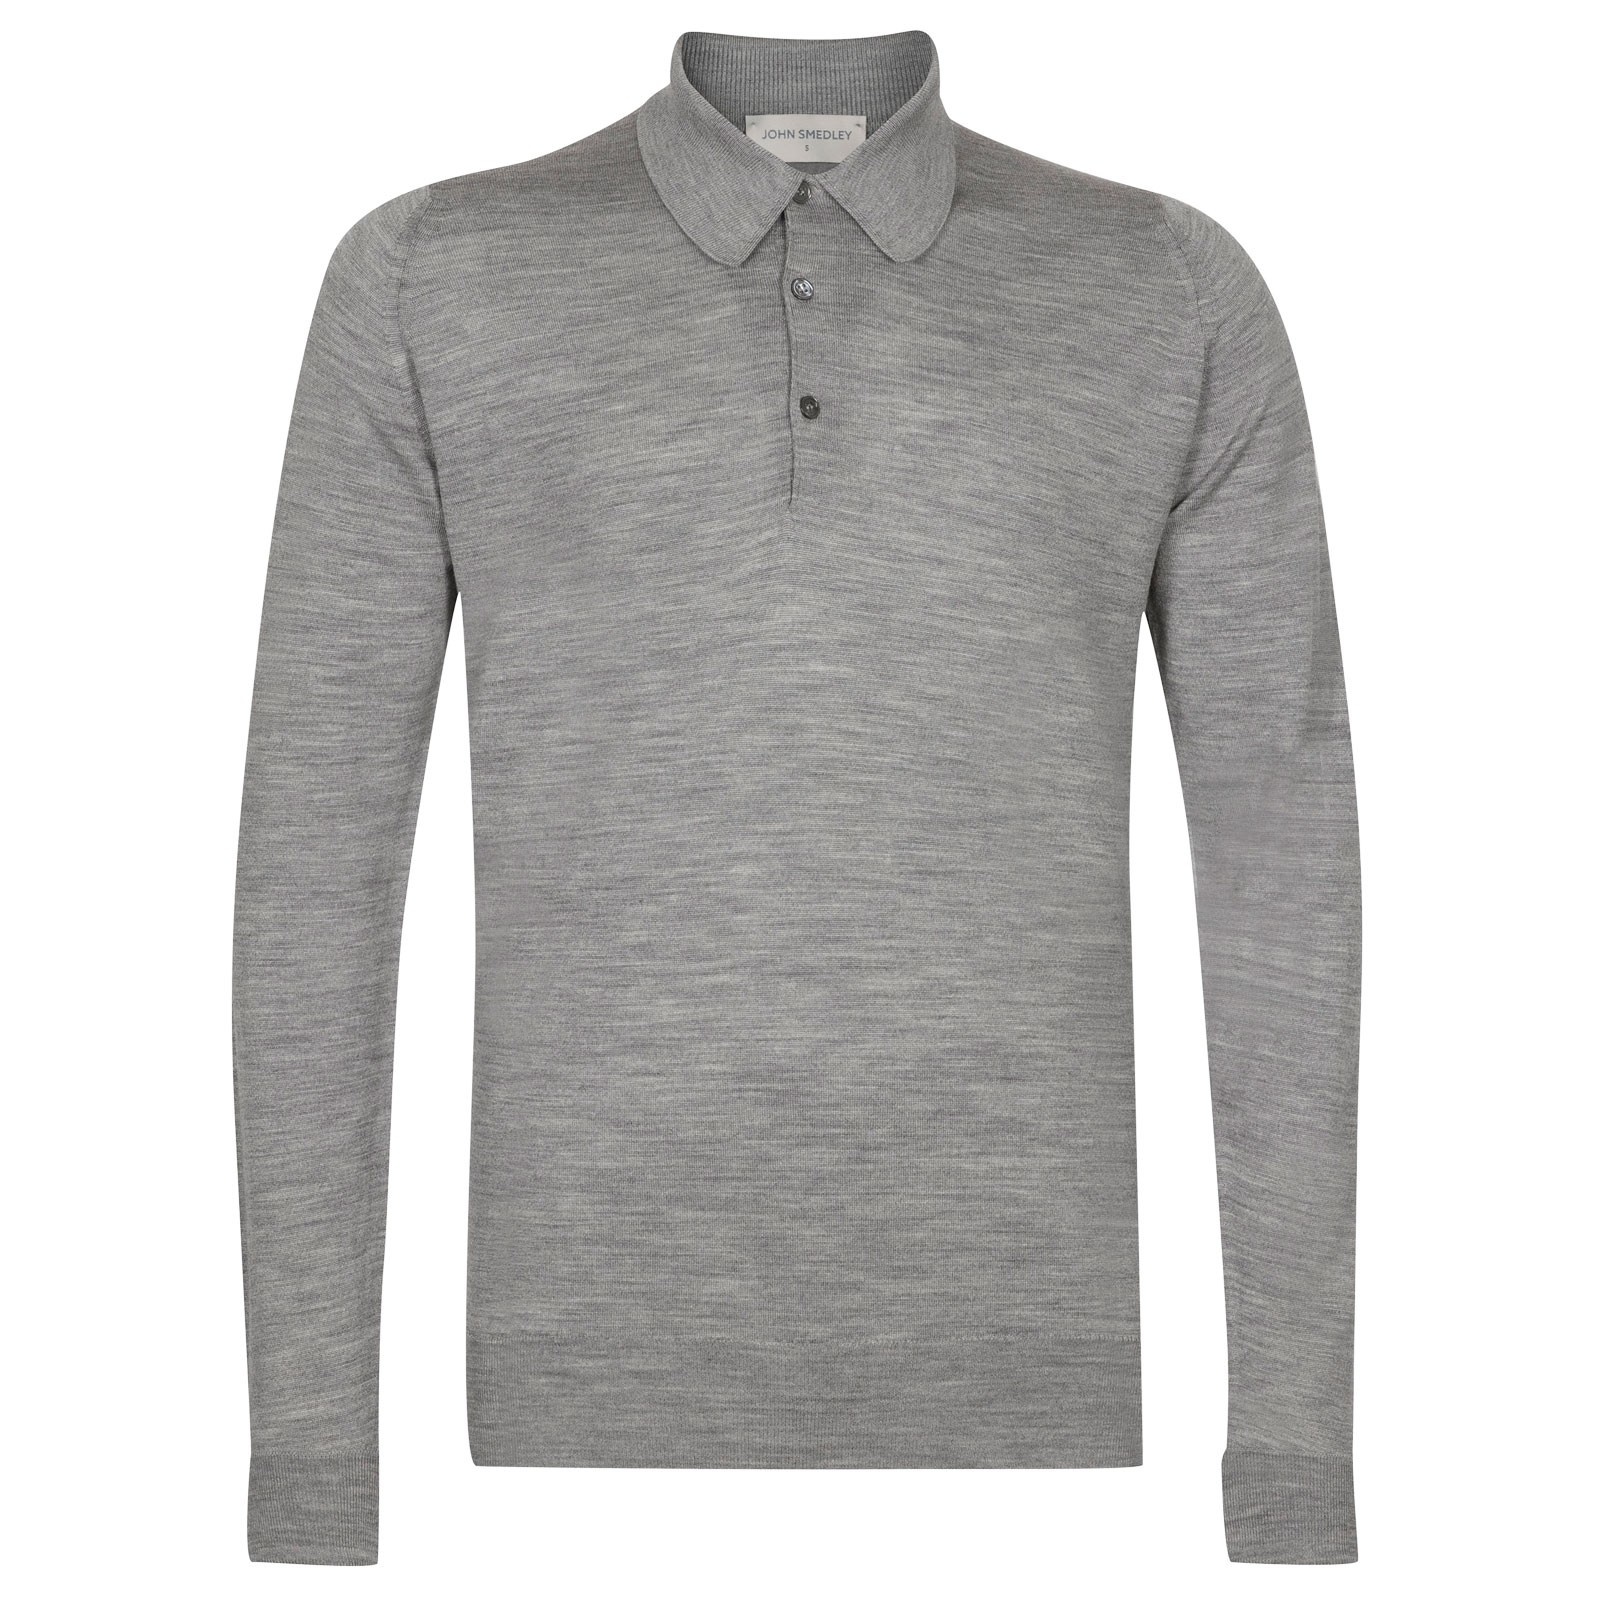 John Smedley Dorset Polo Shirt Long Sleeve Silver Merino Wool - Quality ...